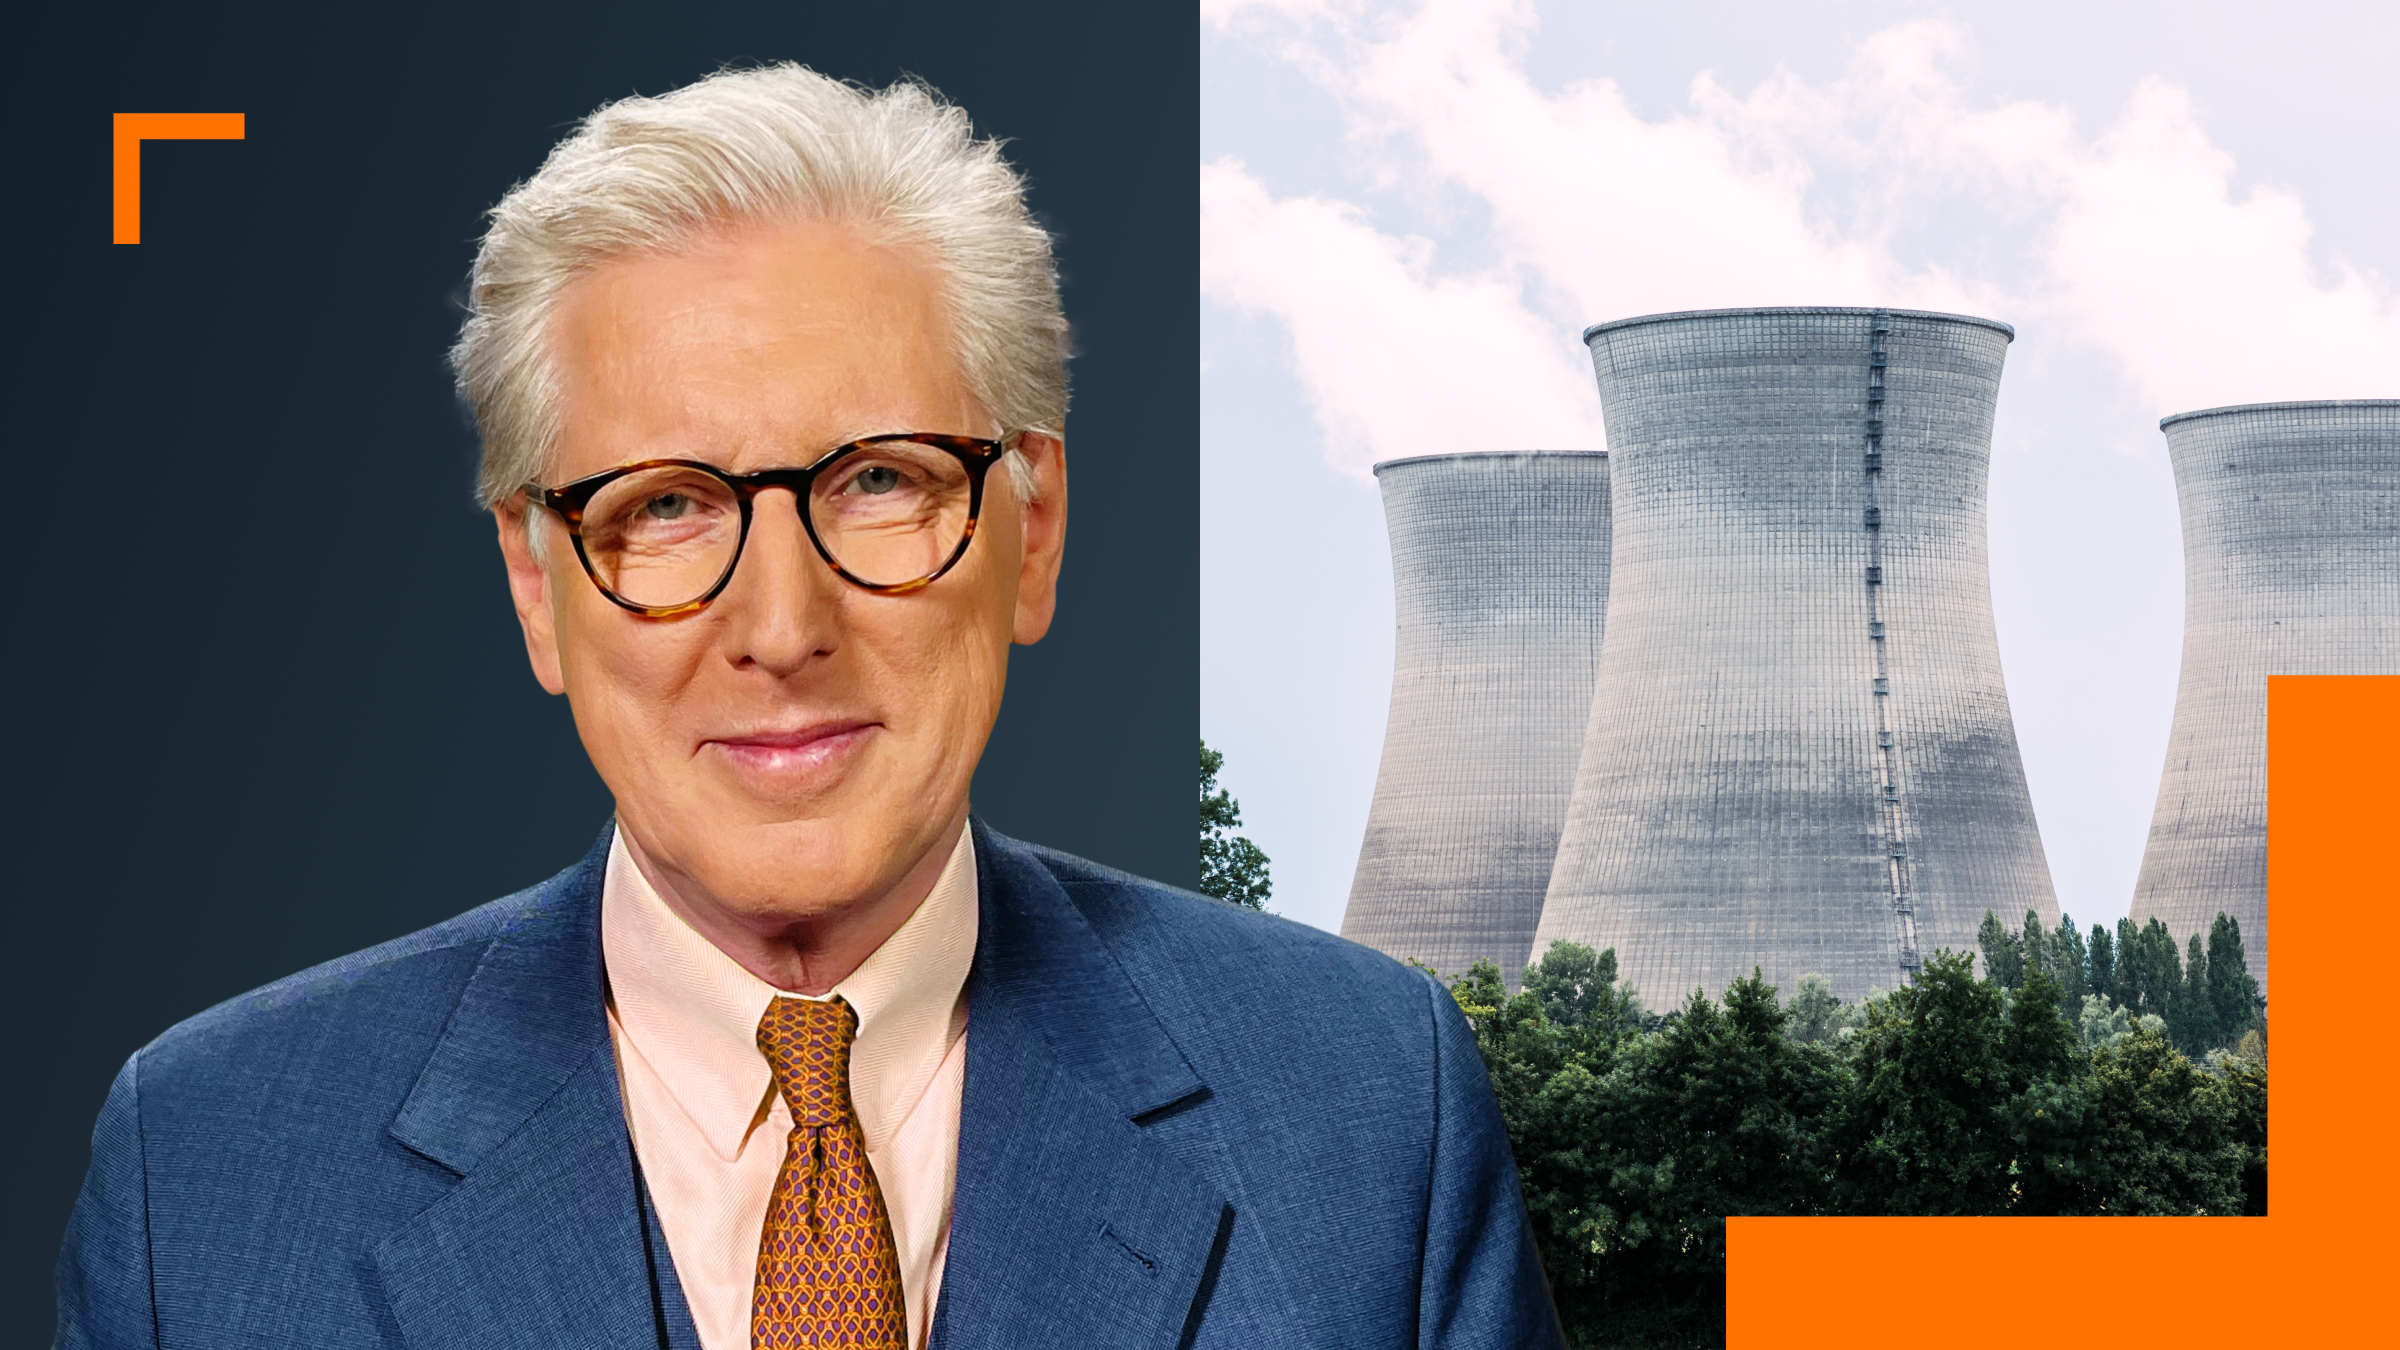 Kernkraft-Comeback: Atomenergie als Gewinner der Energiekrise?